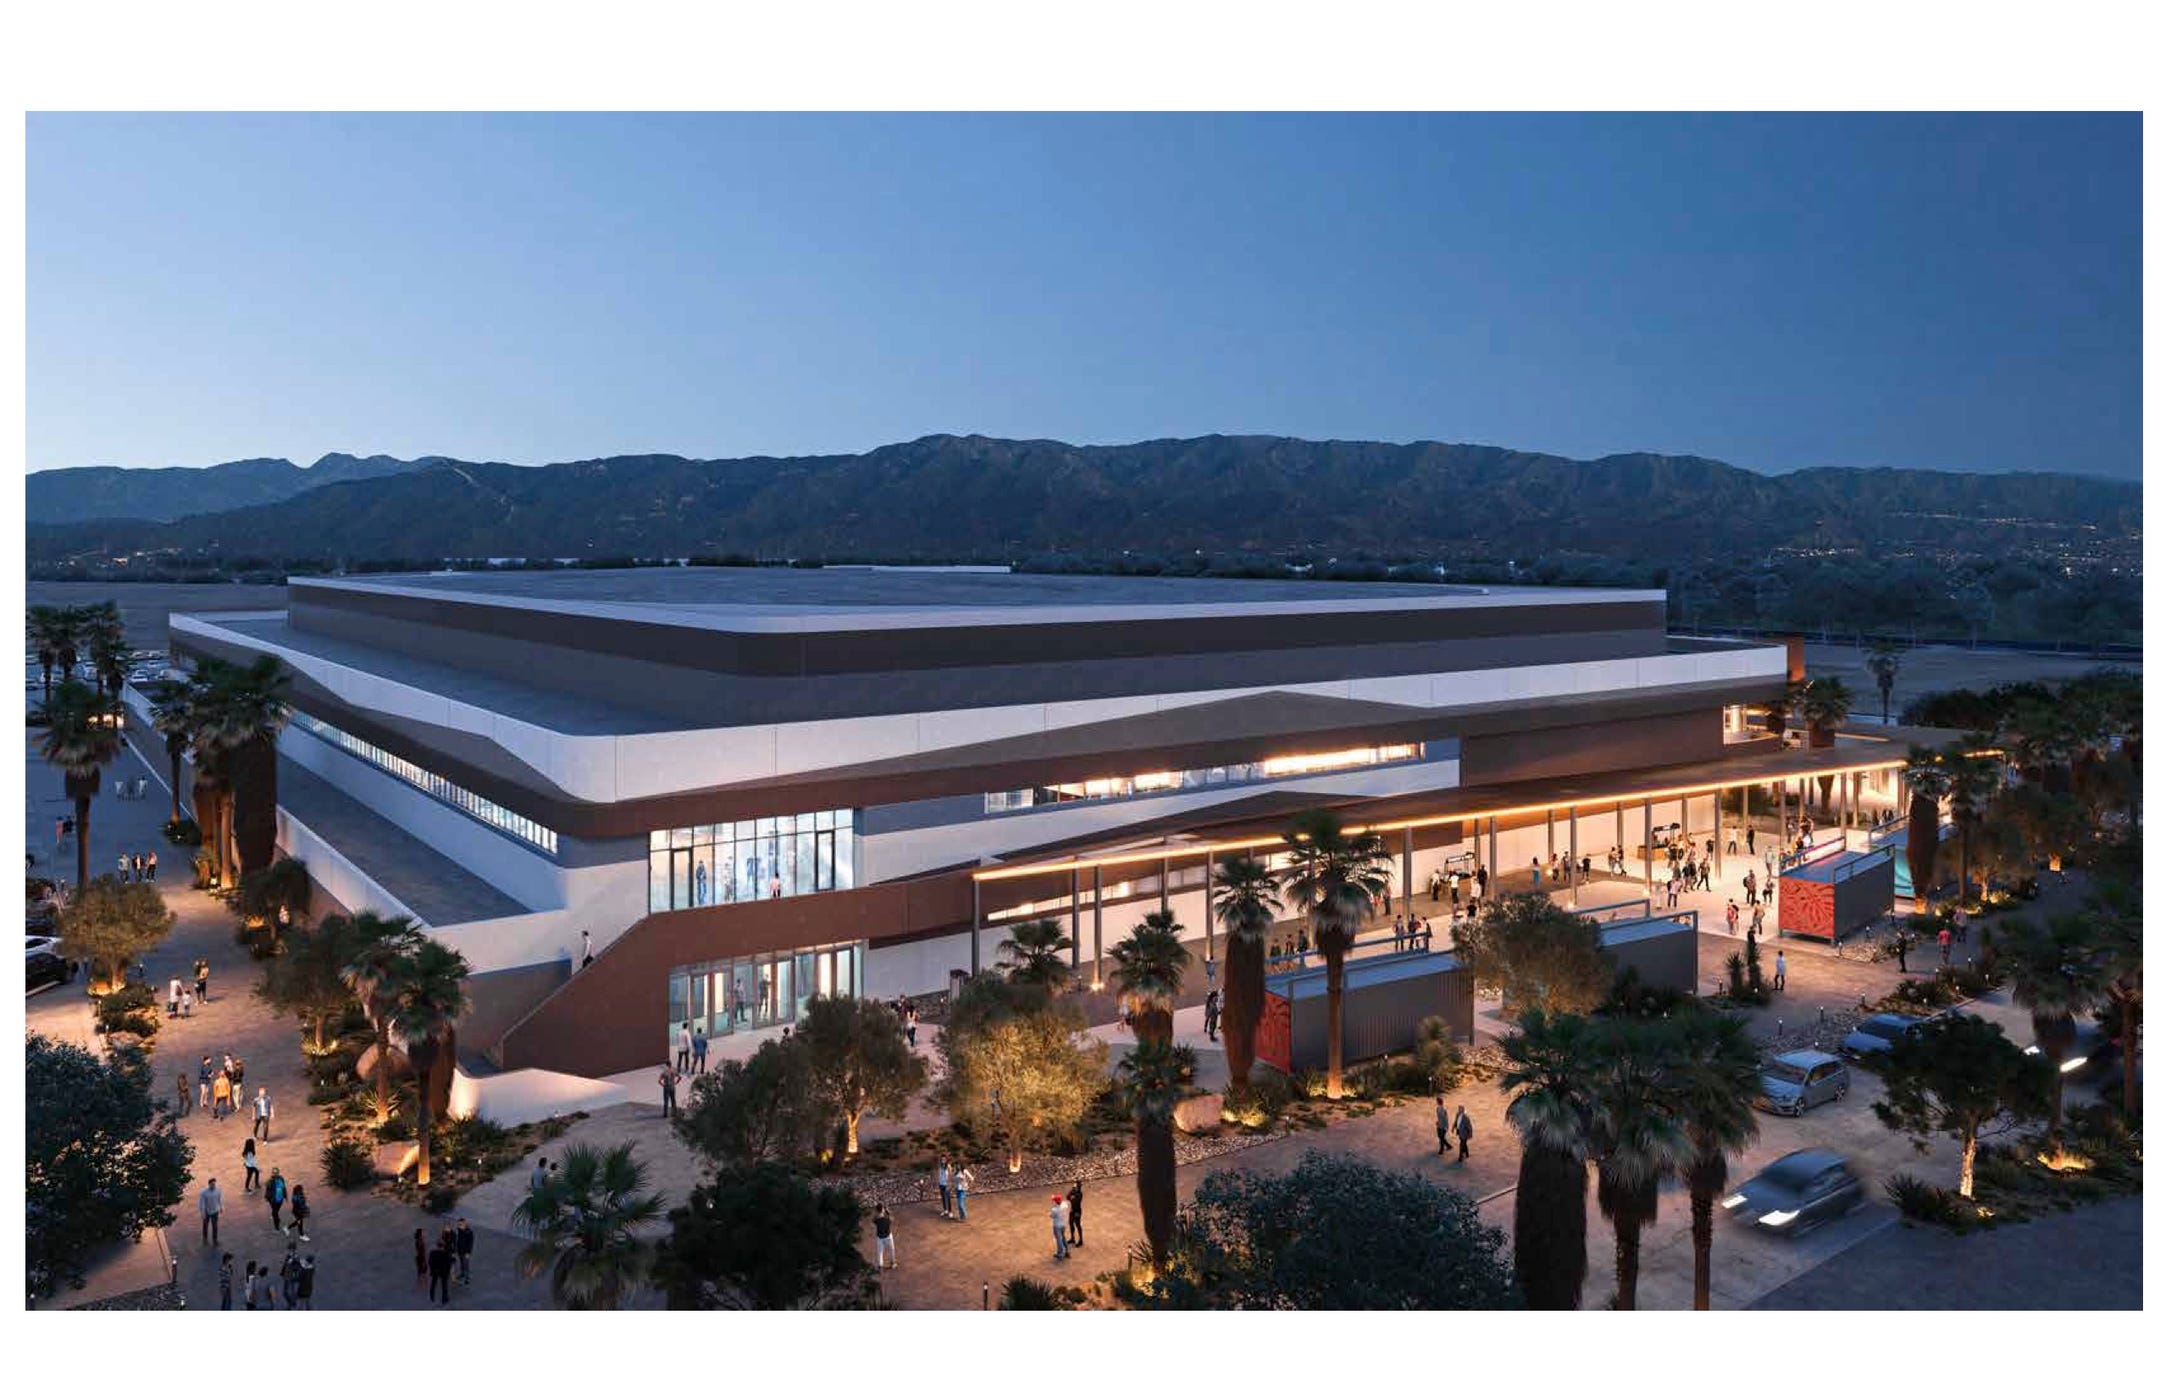 250 million Palm Springs area arena design to have desertunique features